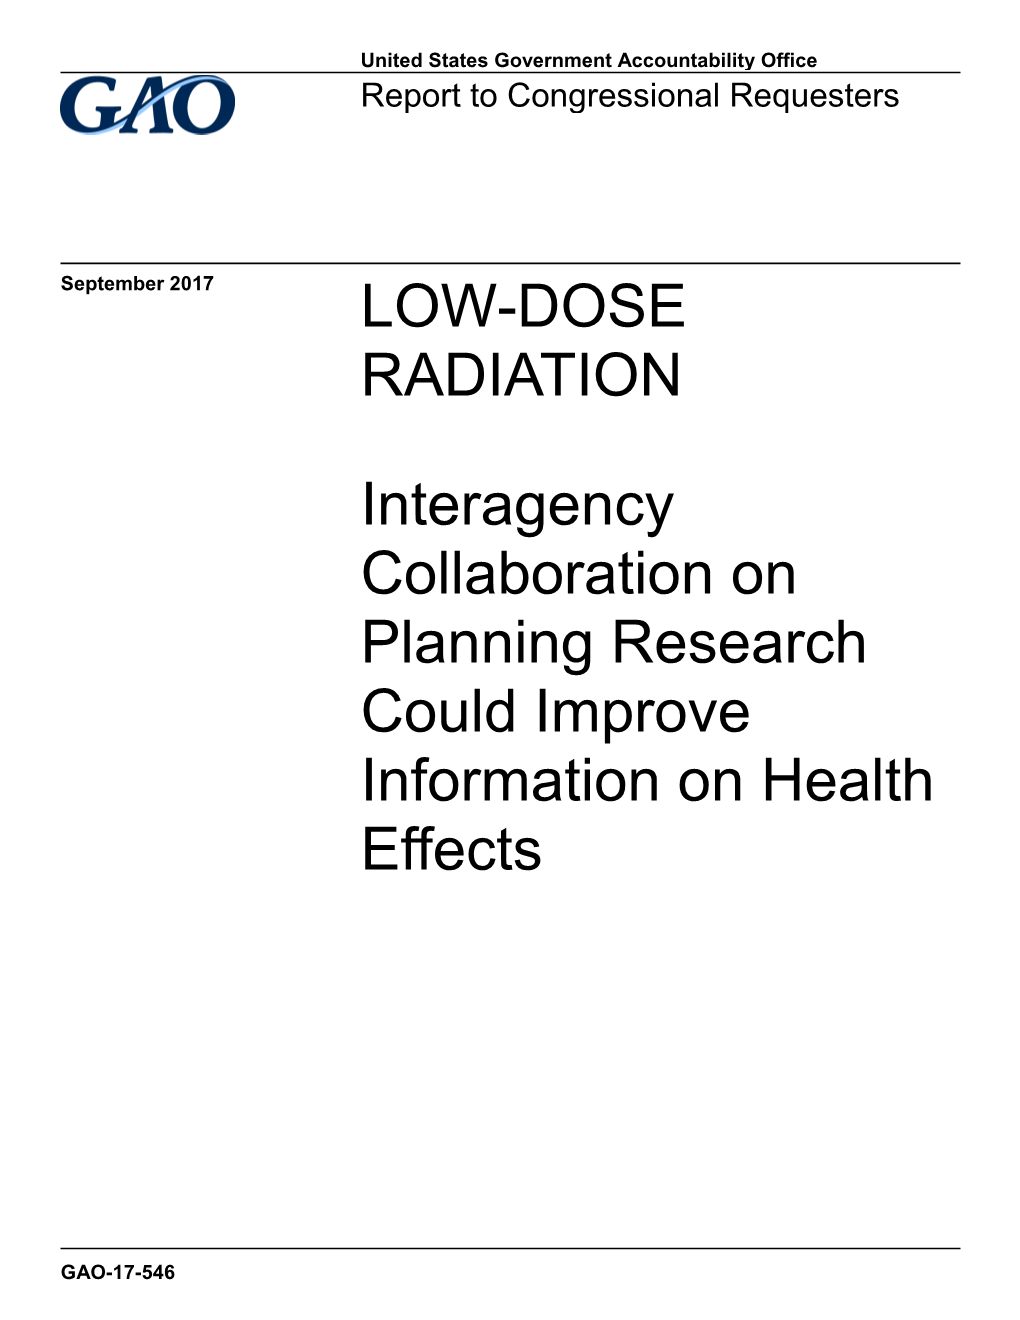 Gao-17-546, Low-Dose Radiation